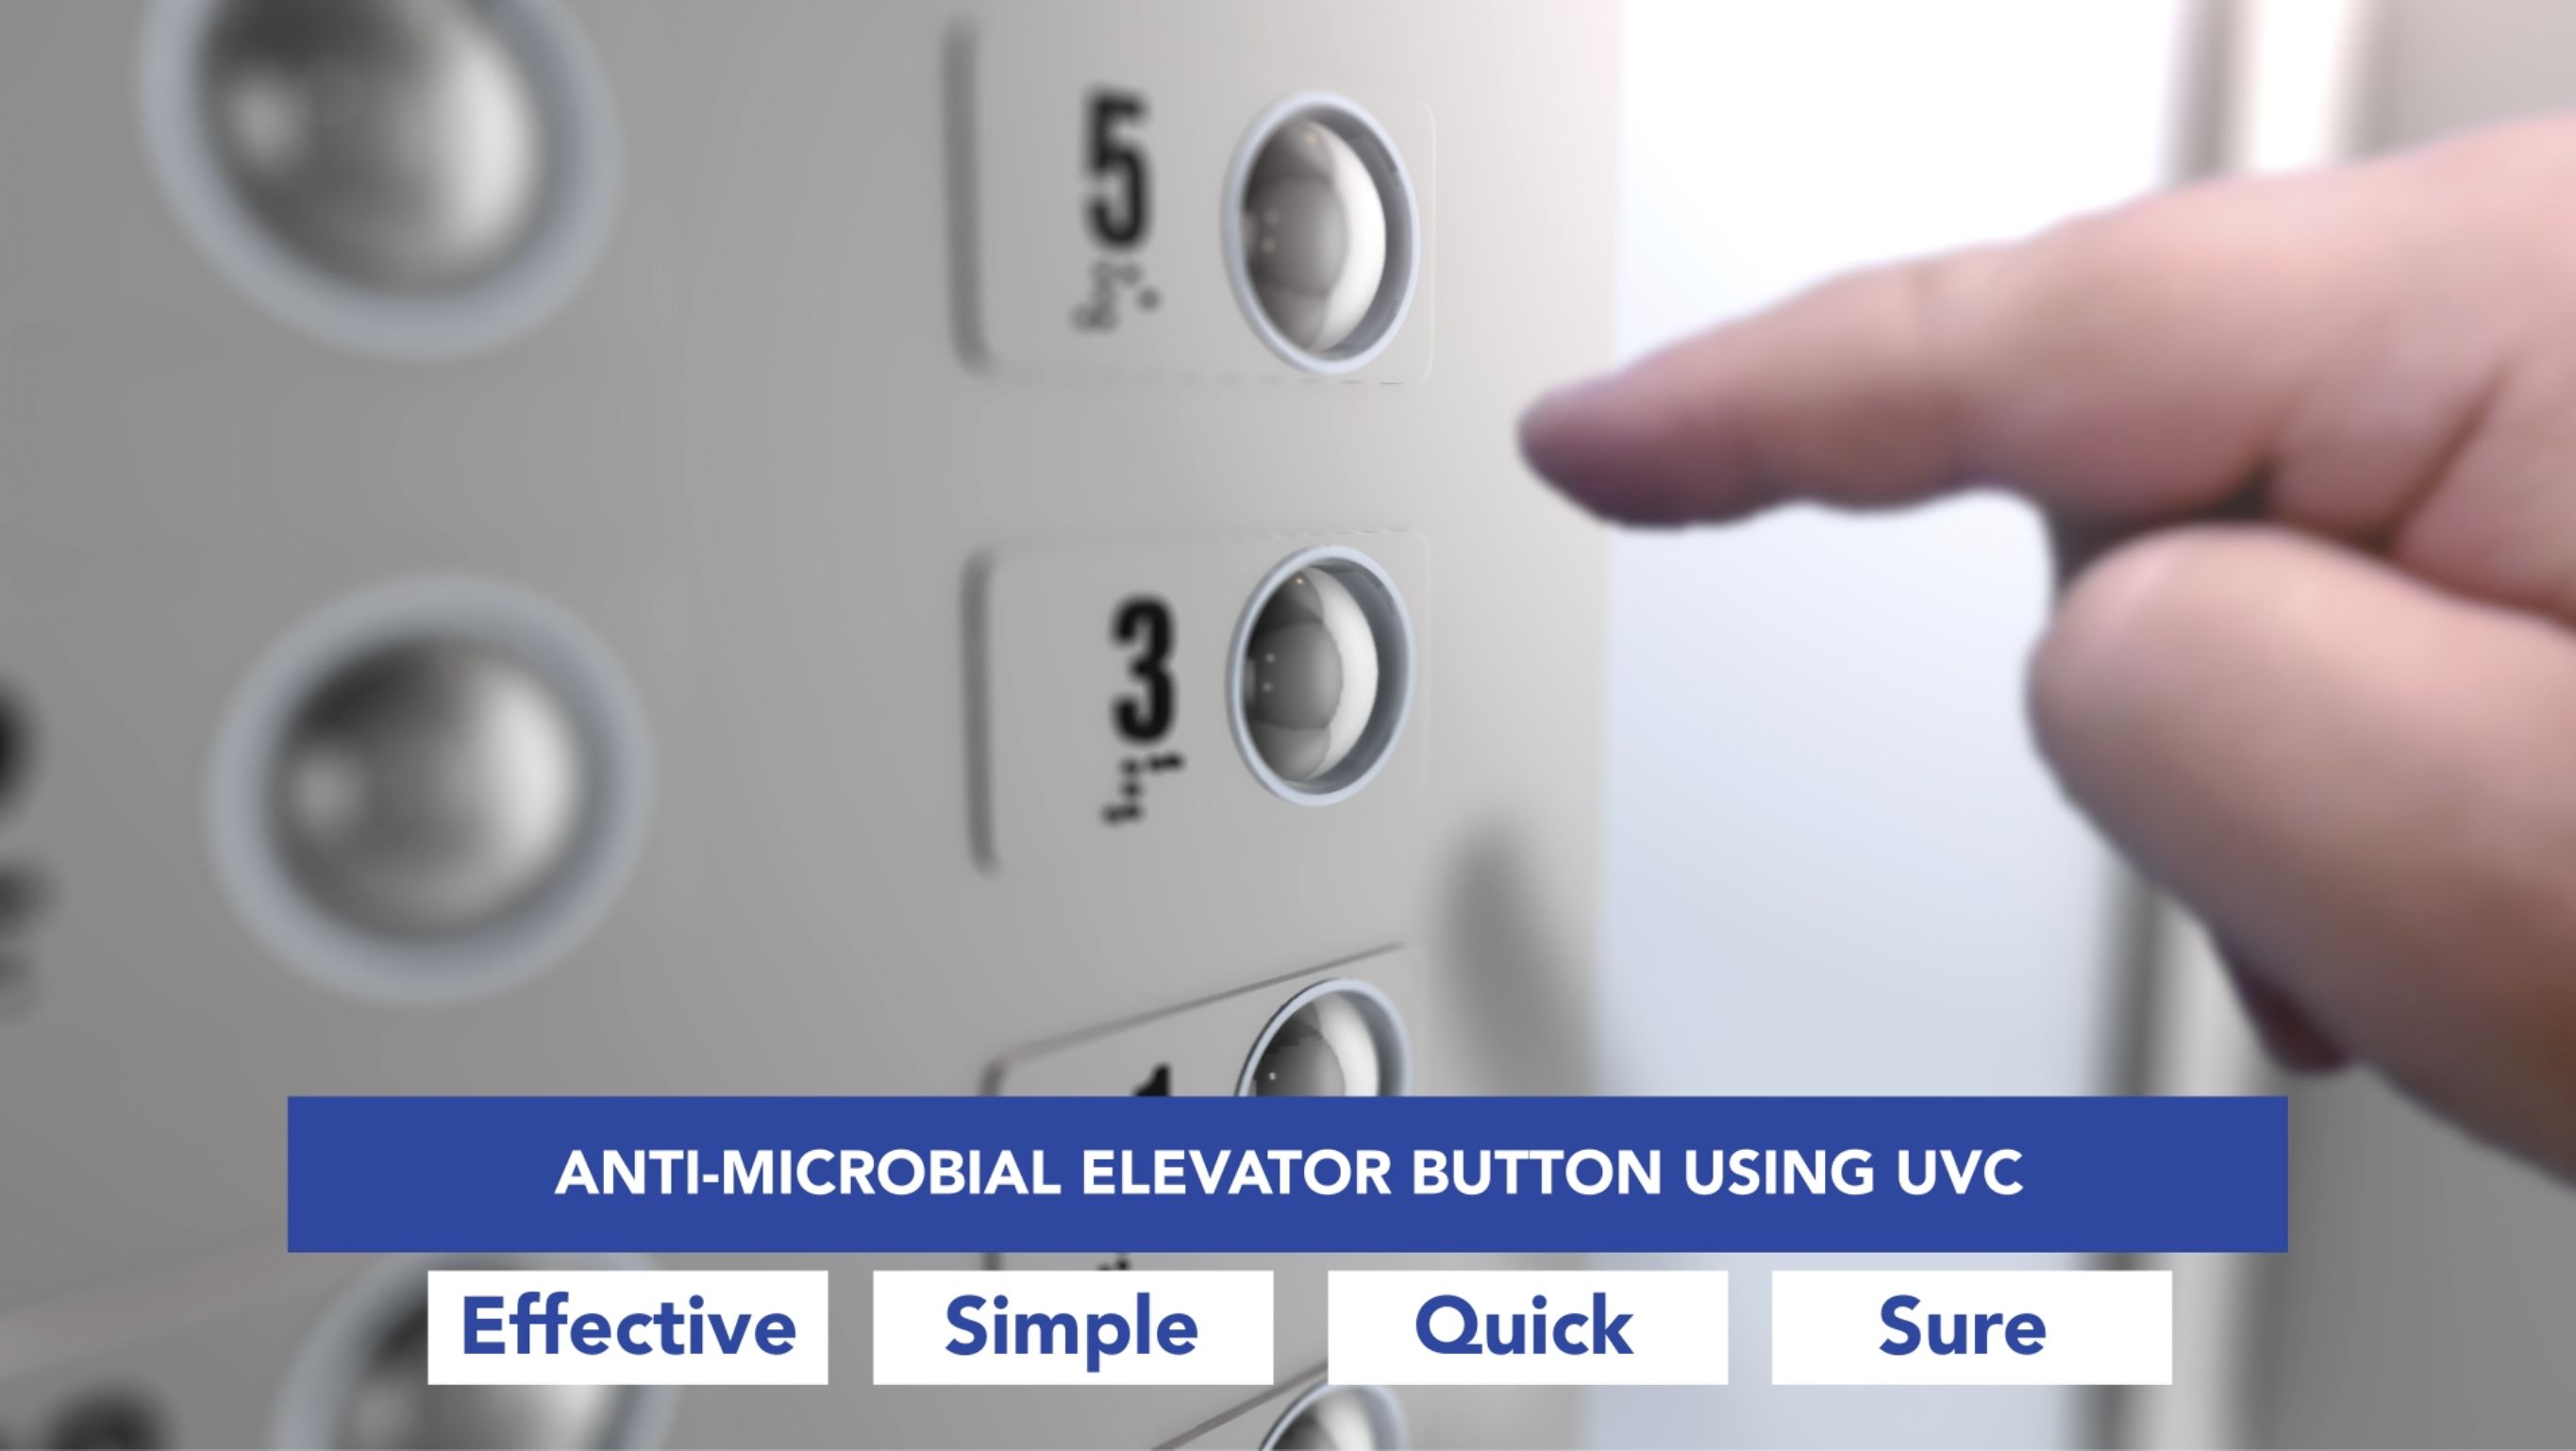 The LIBU elevator button